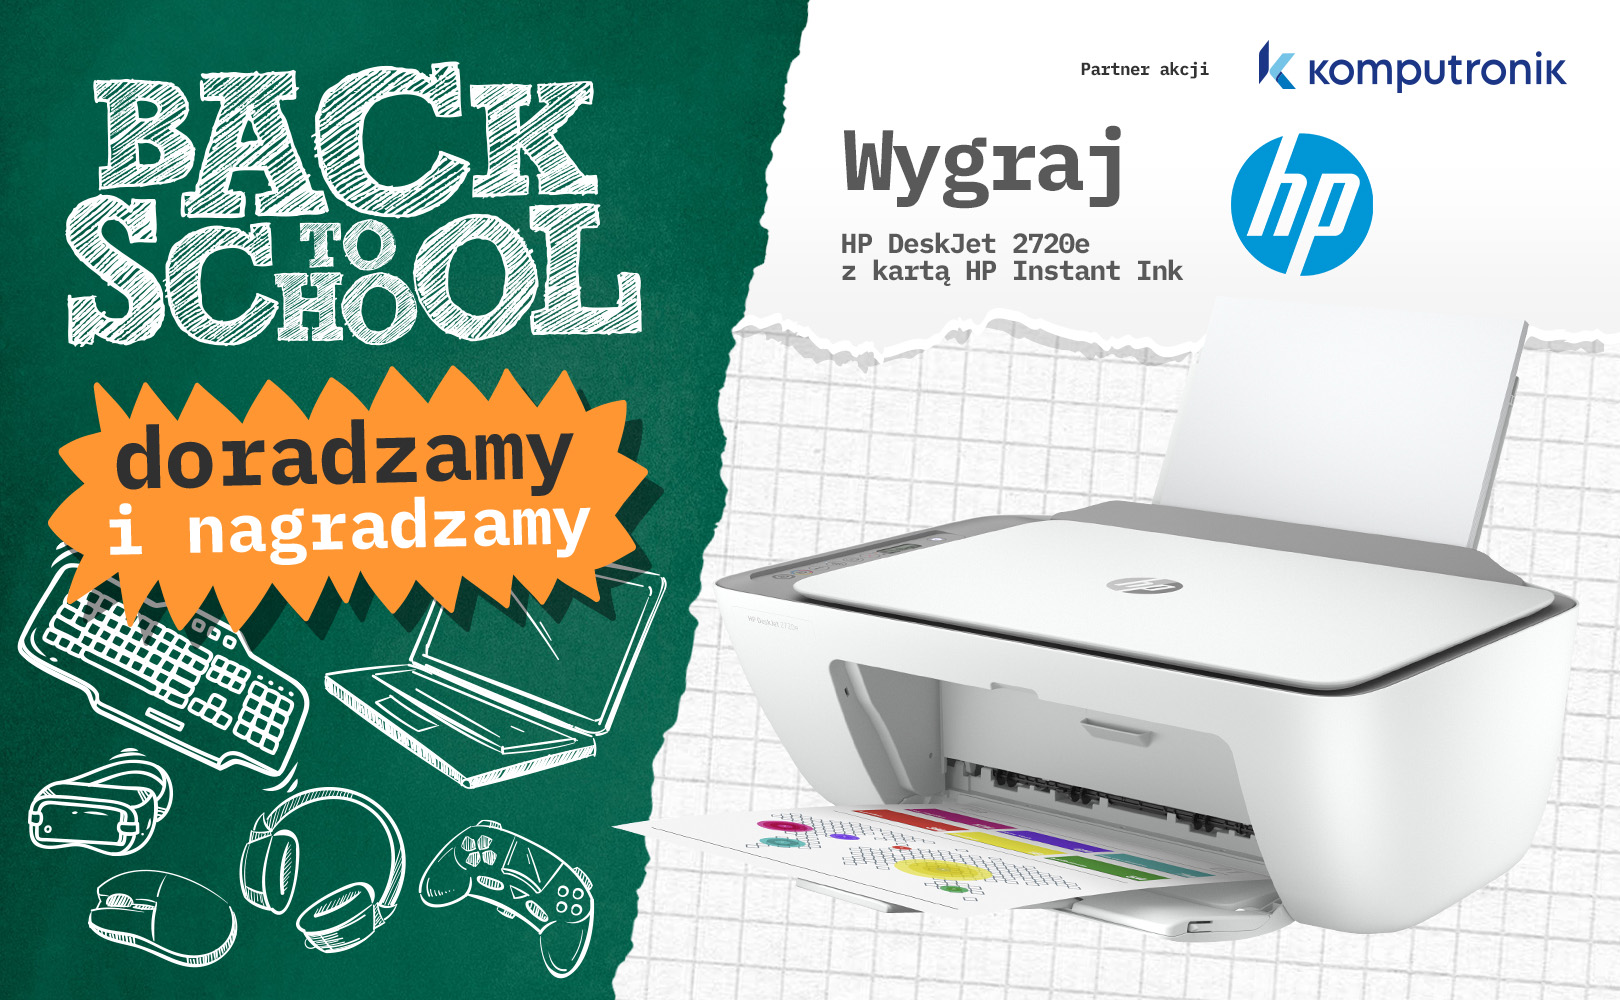 Wygraj HP DeskJet 2720e z kartą HP Instant Ink